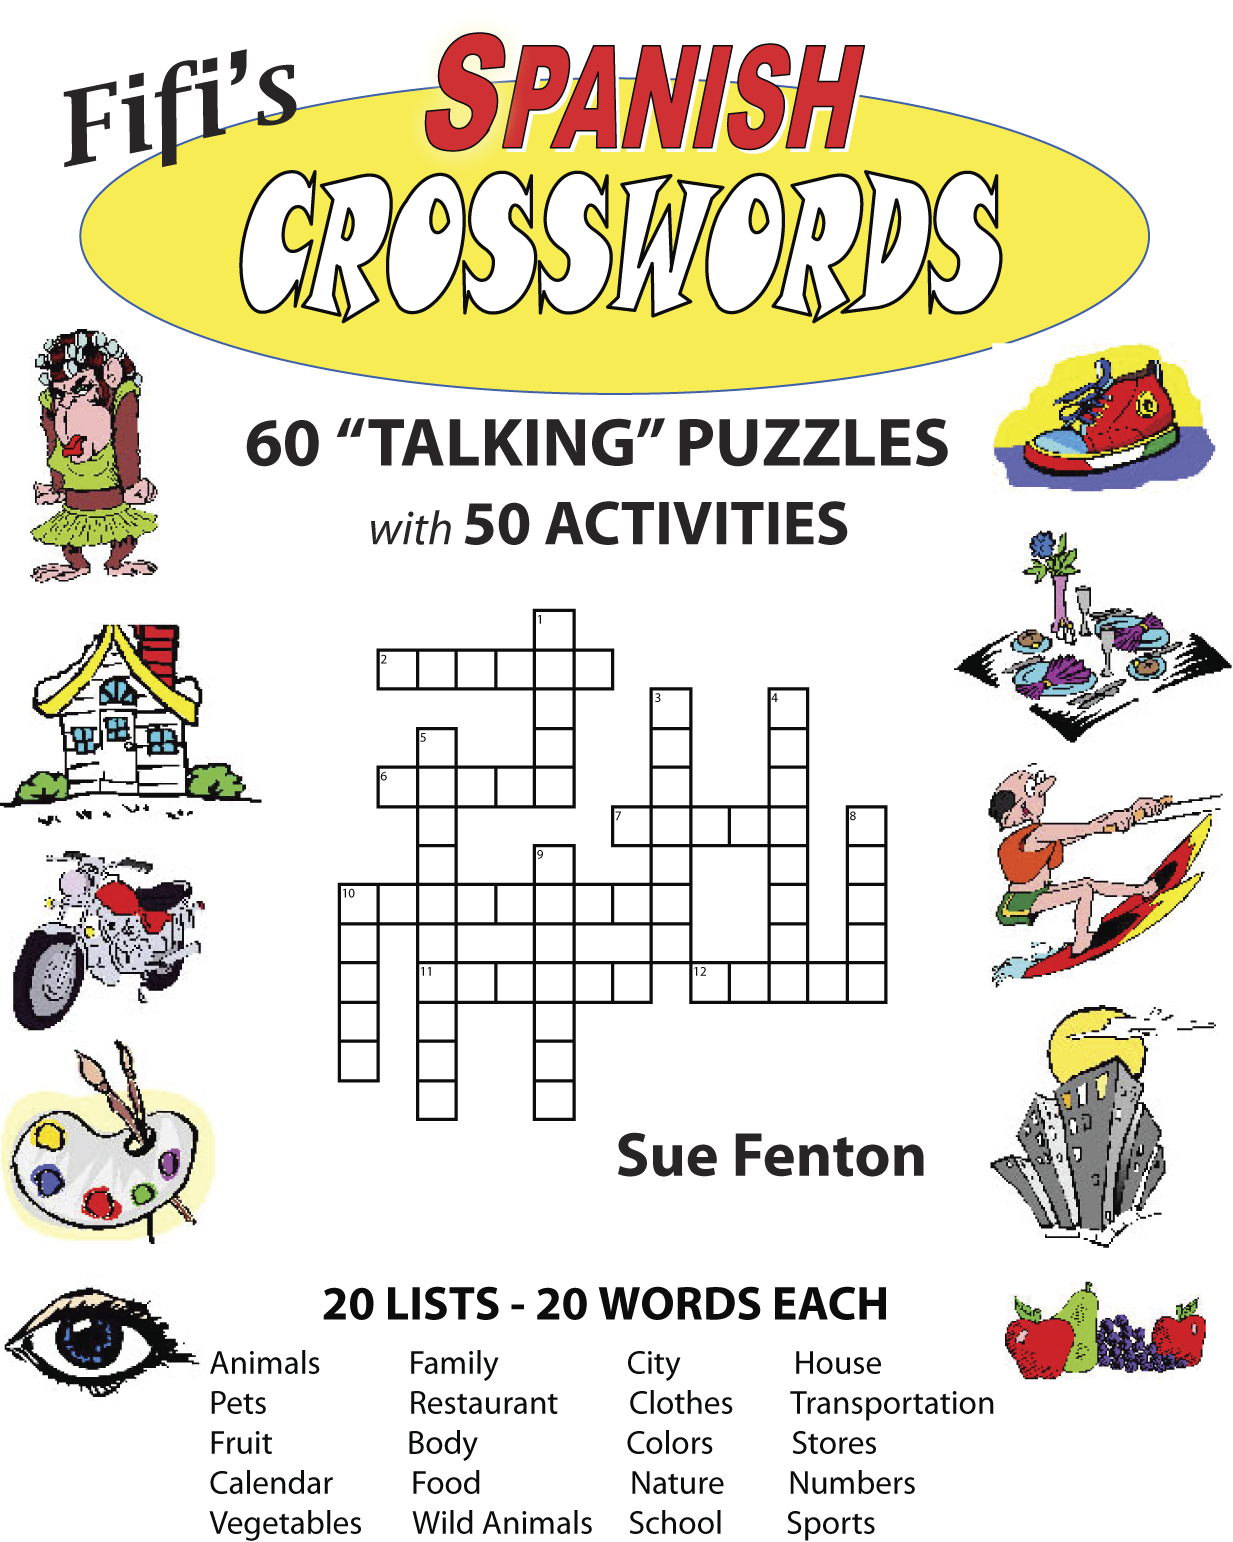 FIFI'S SPANISH CROSSWORDS "Talking" Crosswords